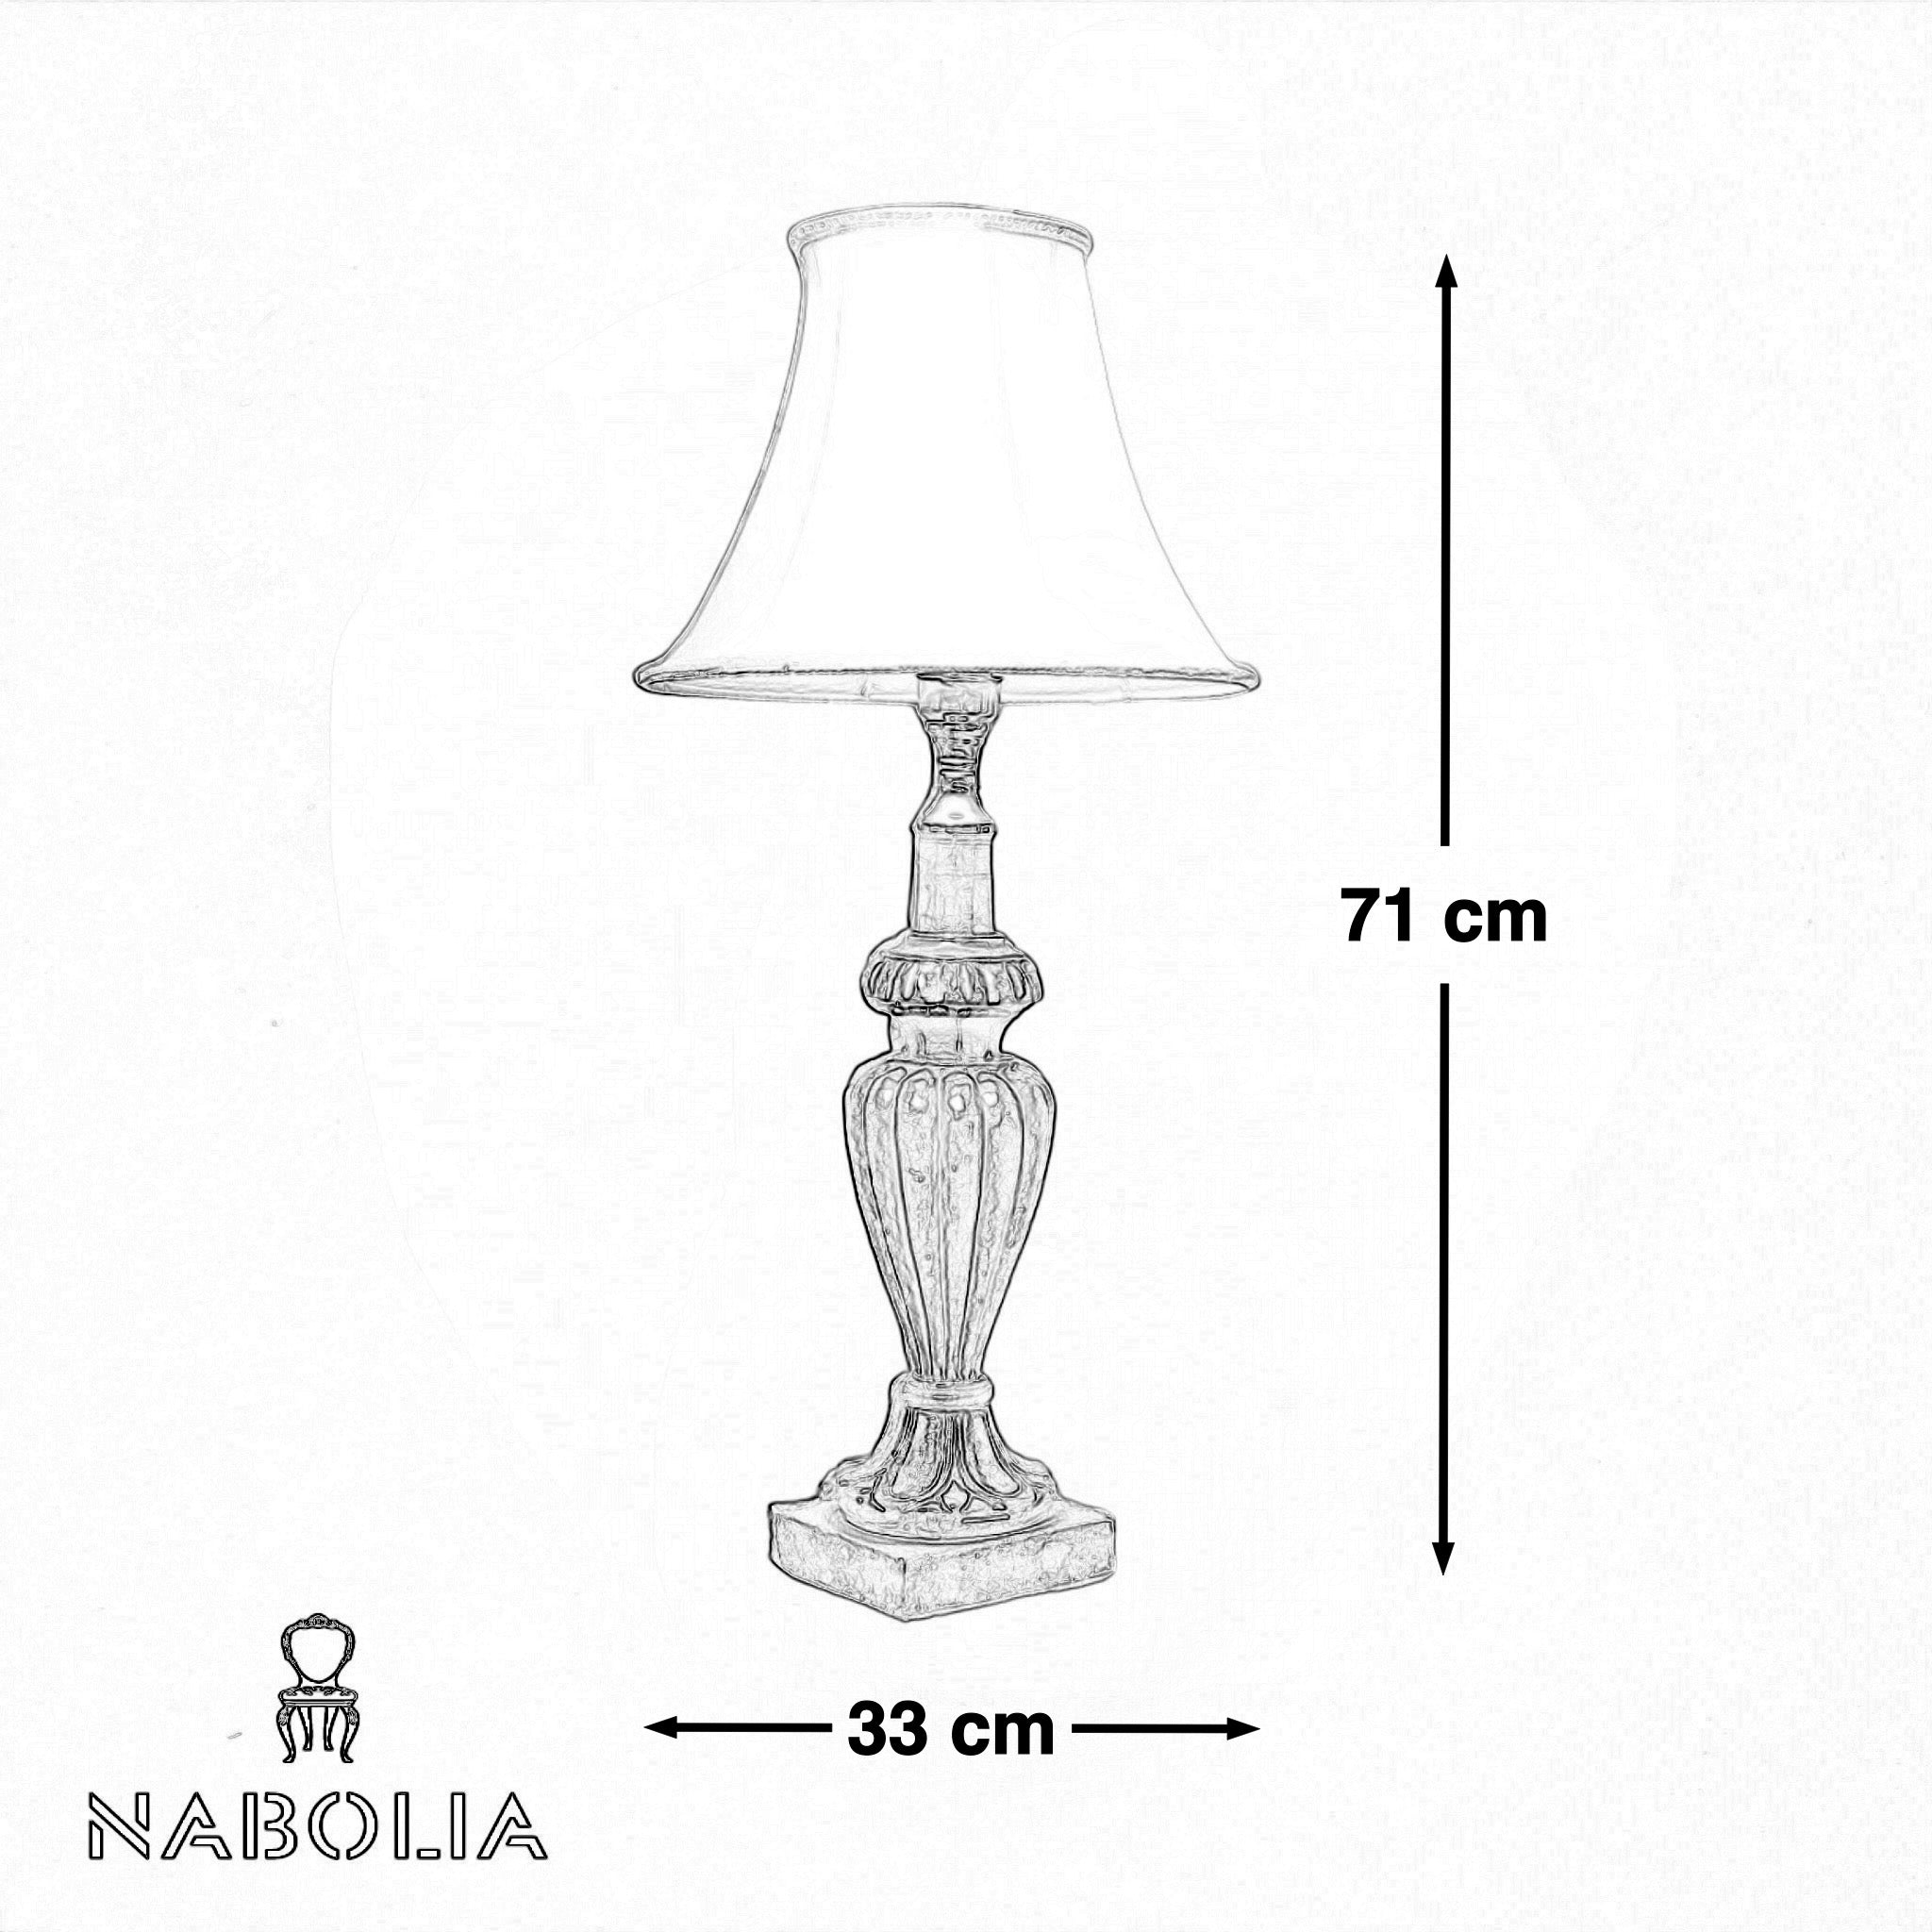 Vendimia table lamp